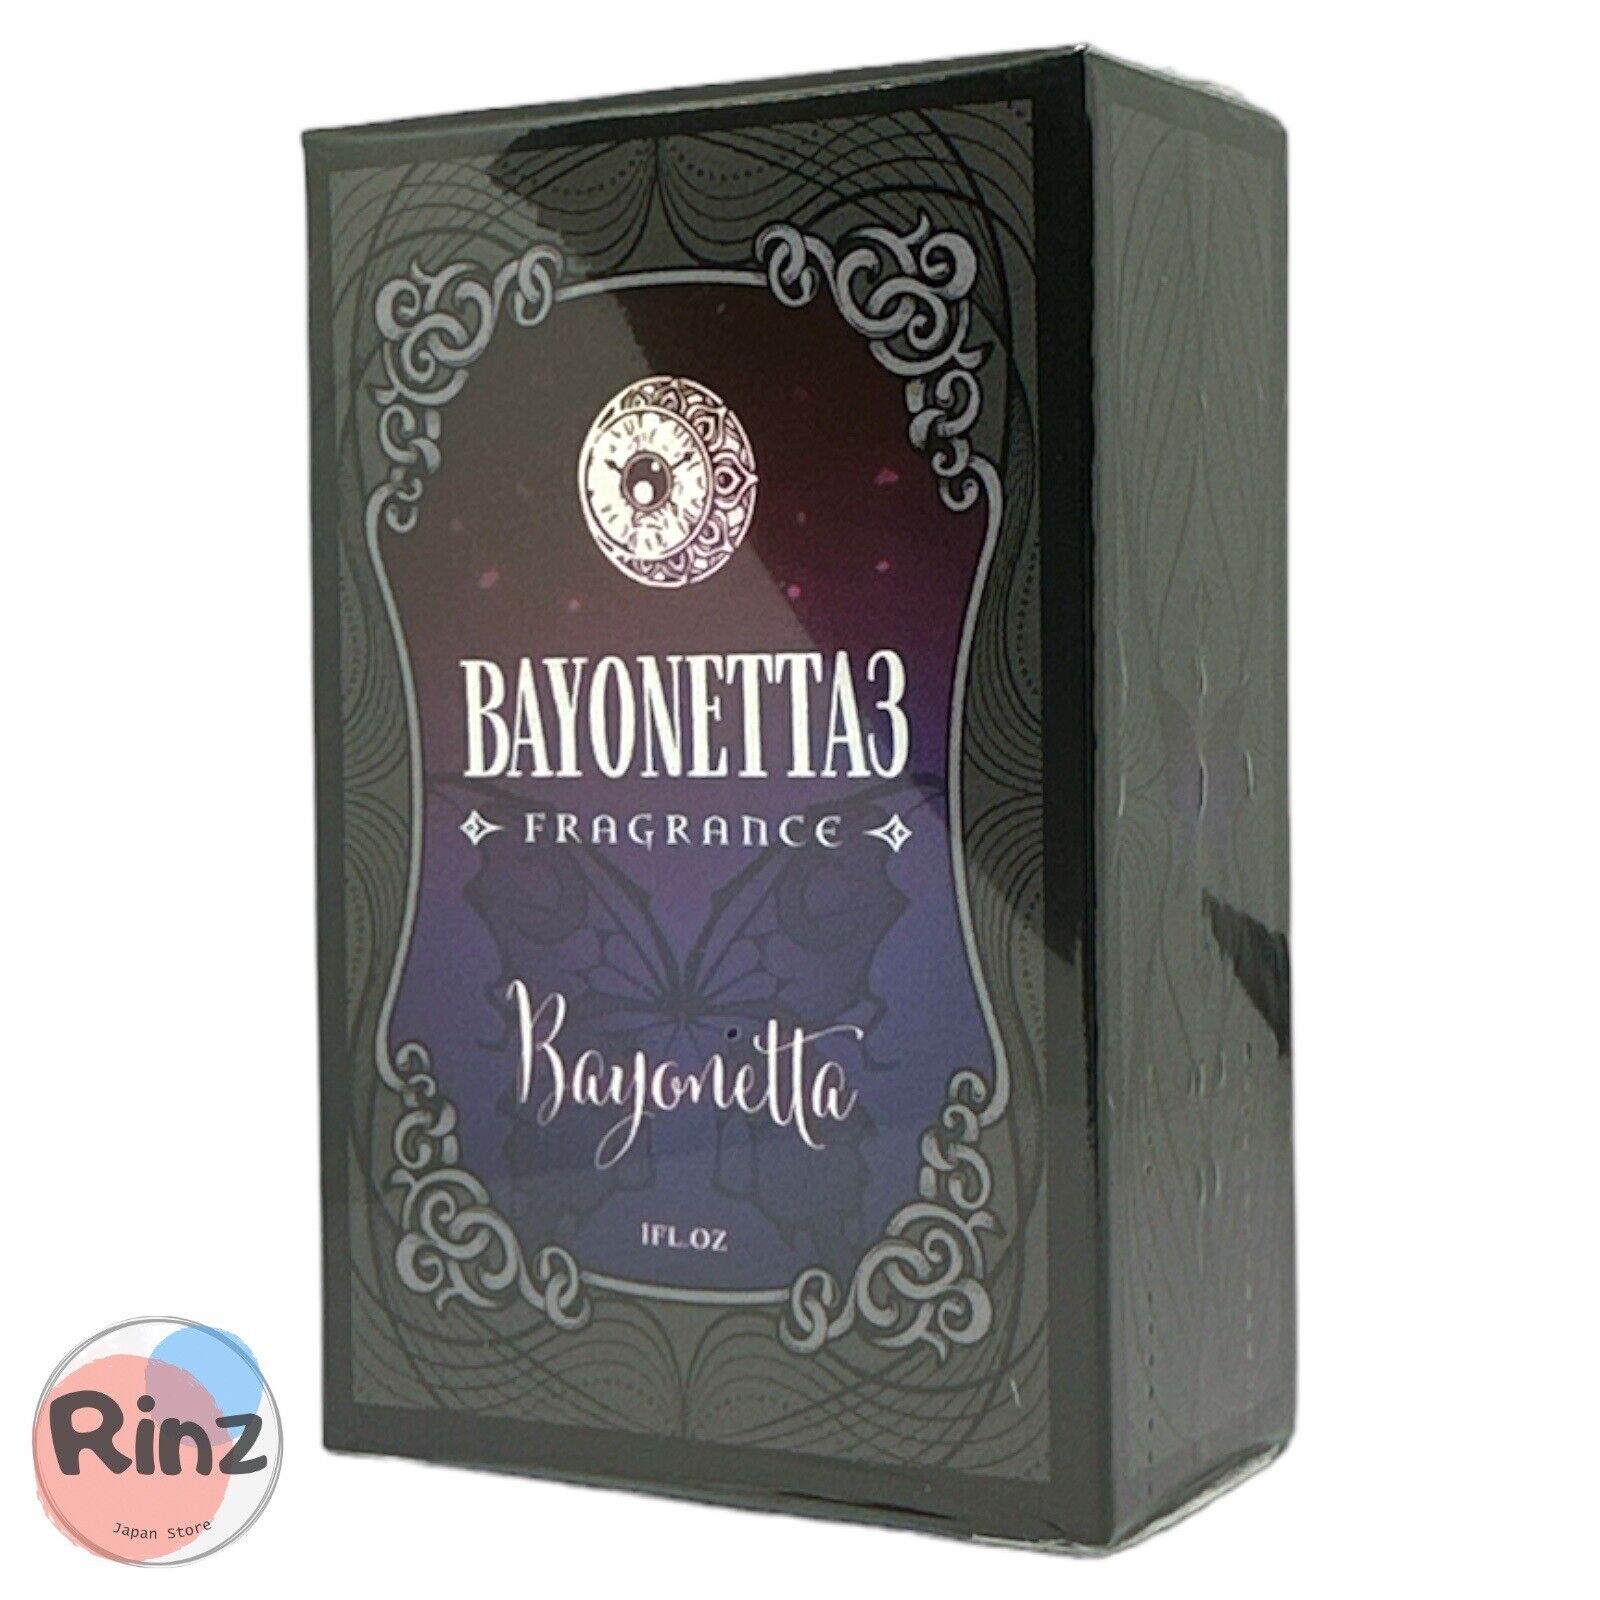 BAYONETTA3 BAYONETTA Fragrance 30ml perfume cologne JAPAN  LIMITED